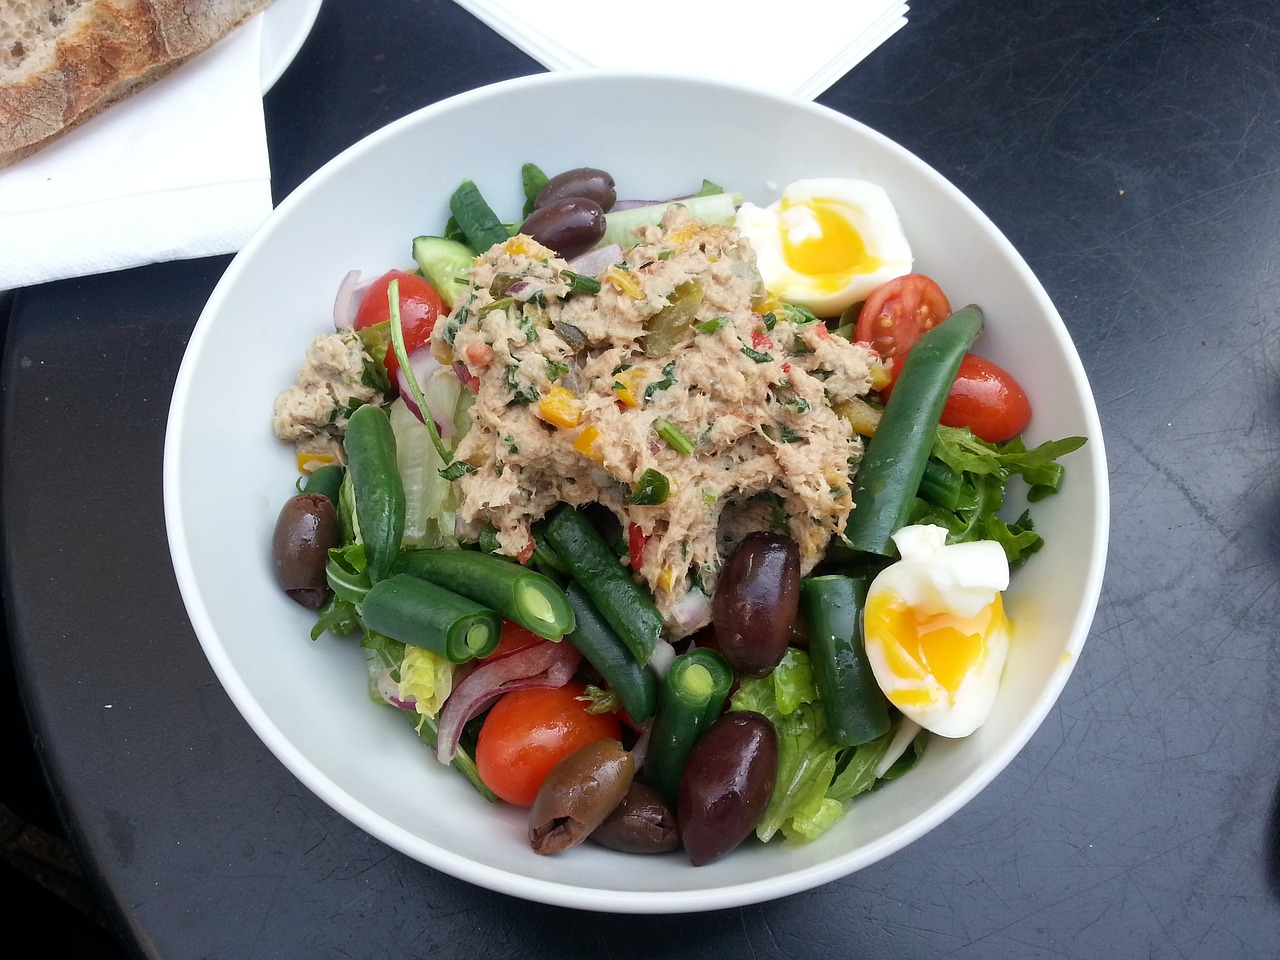 Curried Tuna Rice Salad